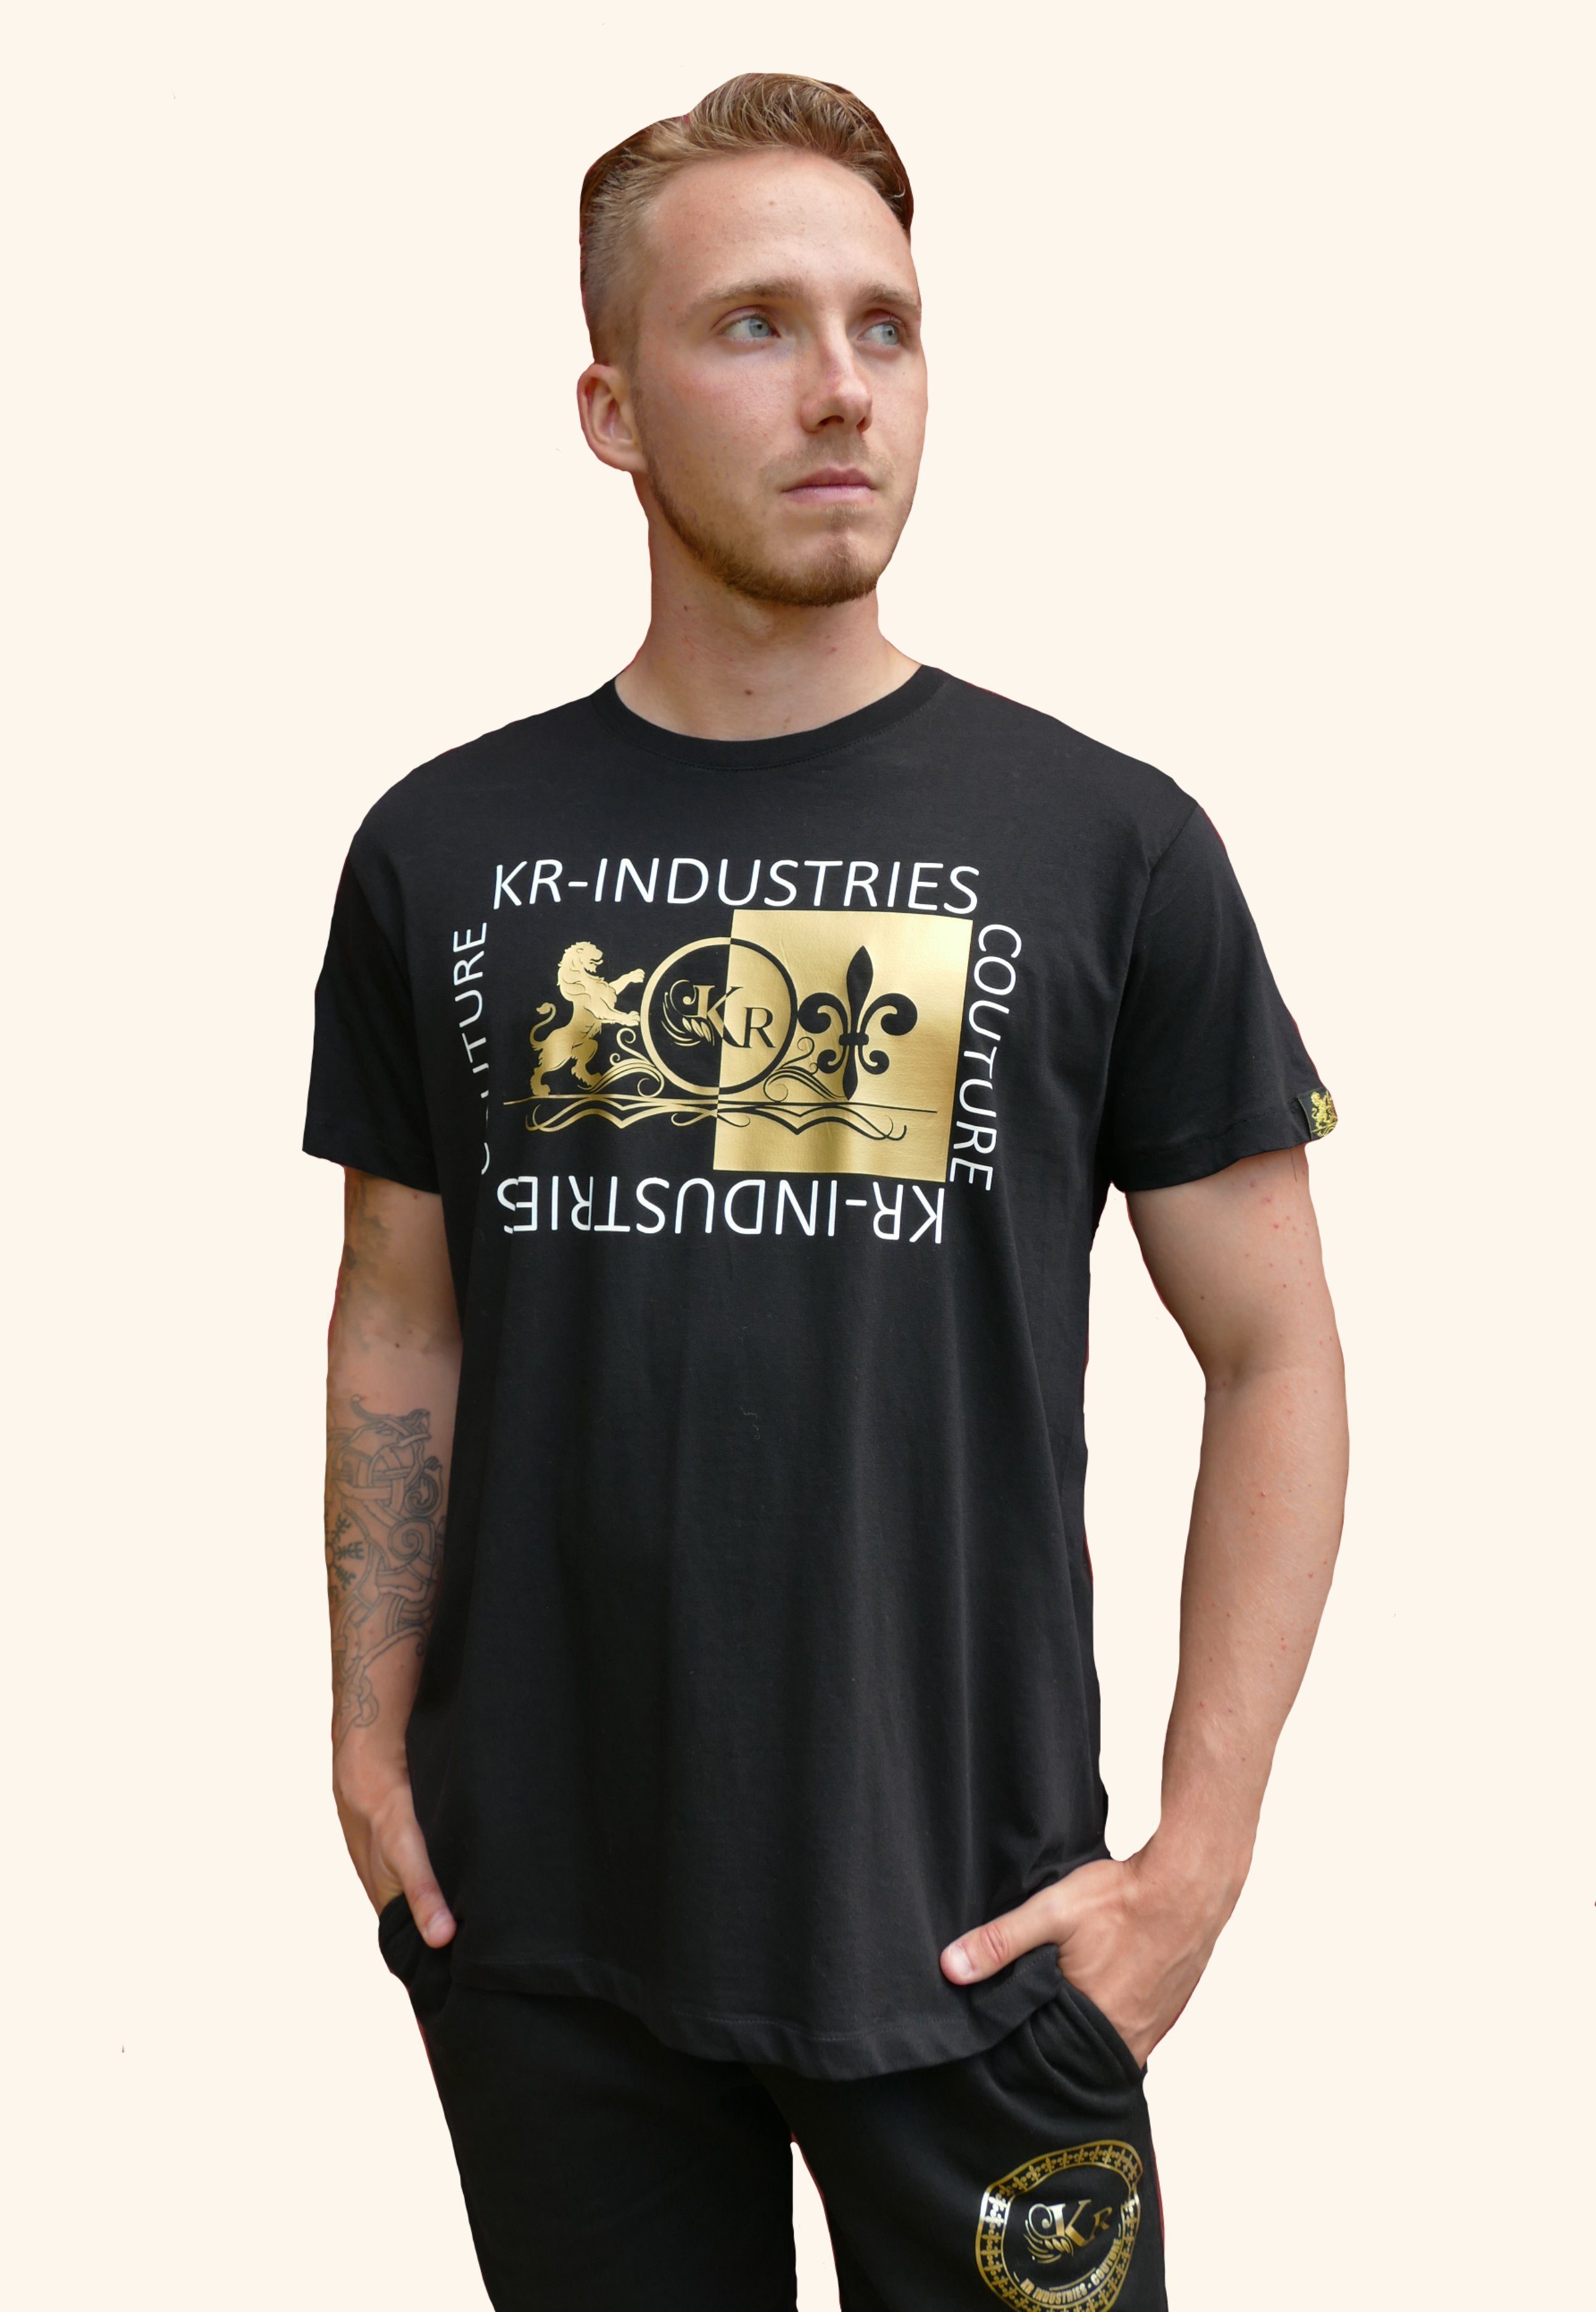 KR-Industries T-Shirt Shirt Yin Yang Applikationen in gold & weiß, Markenlabel